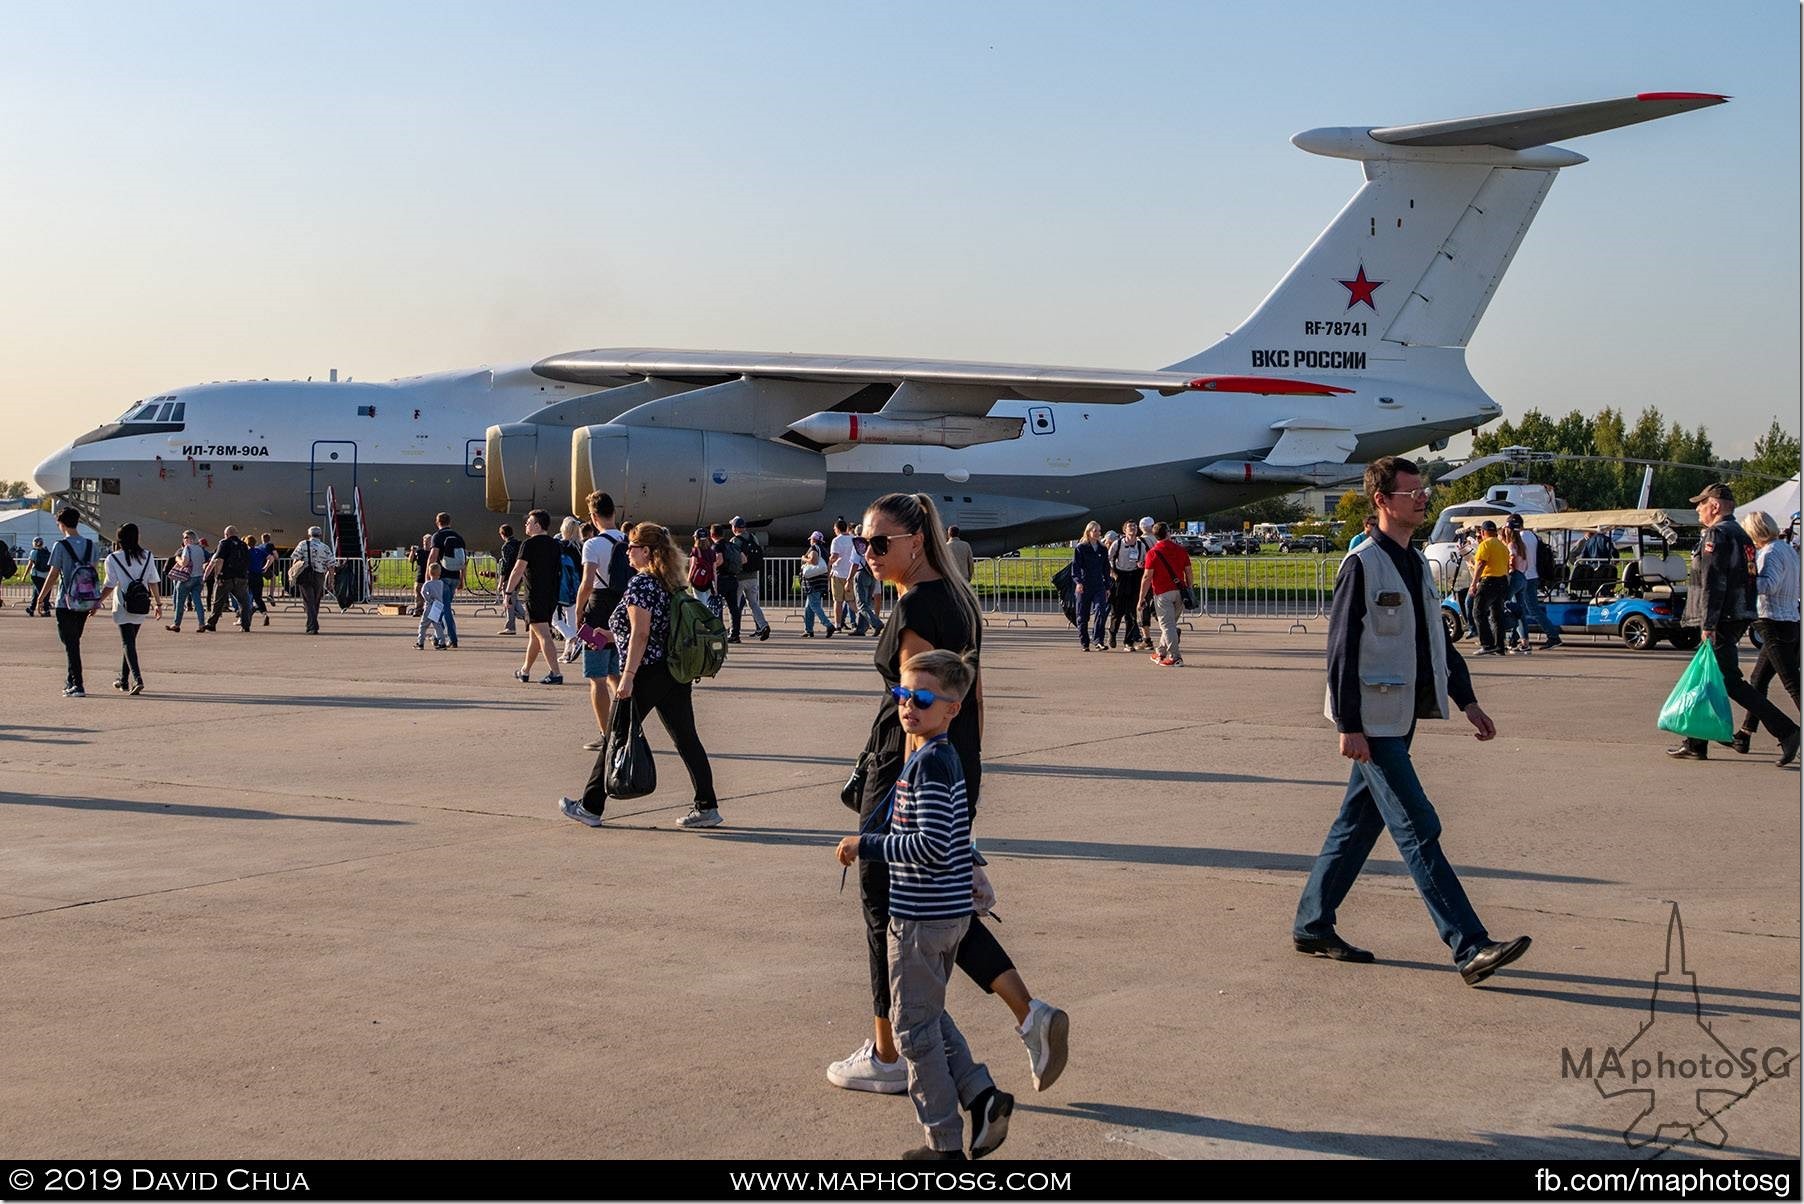 Ilyushin Il-78 aerial refueling tanker